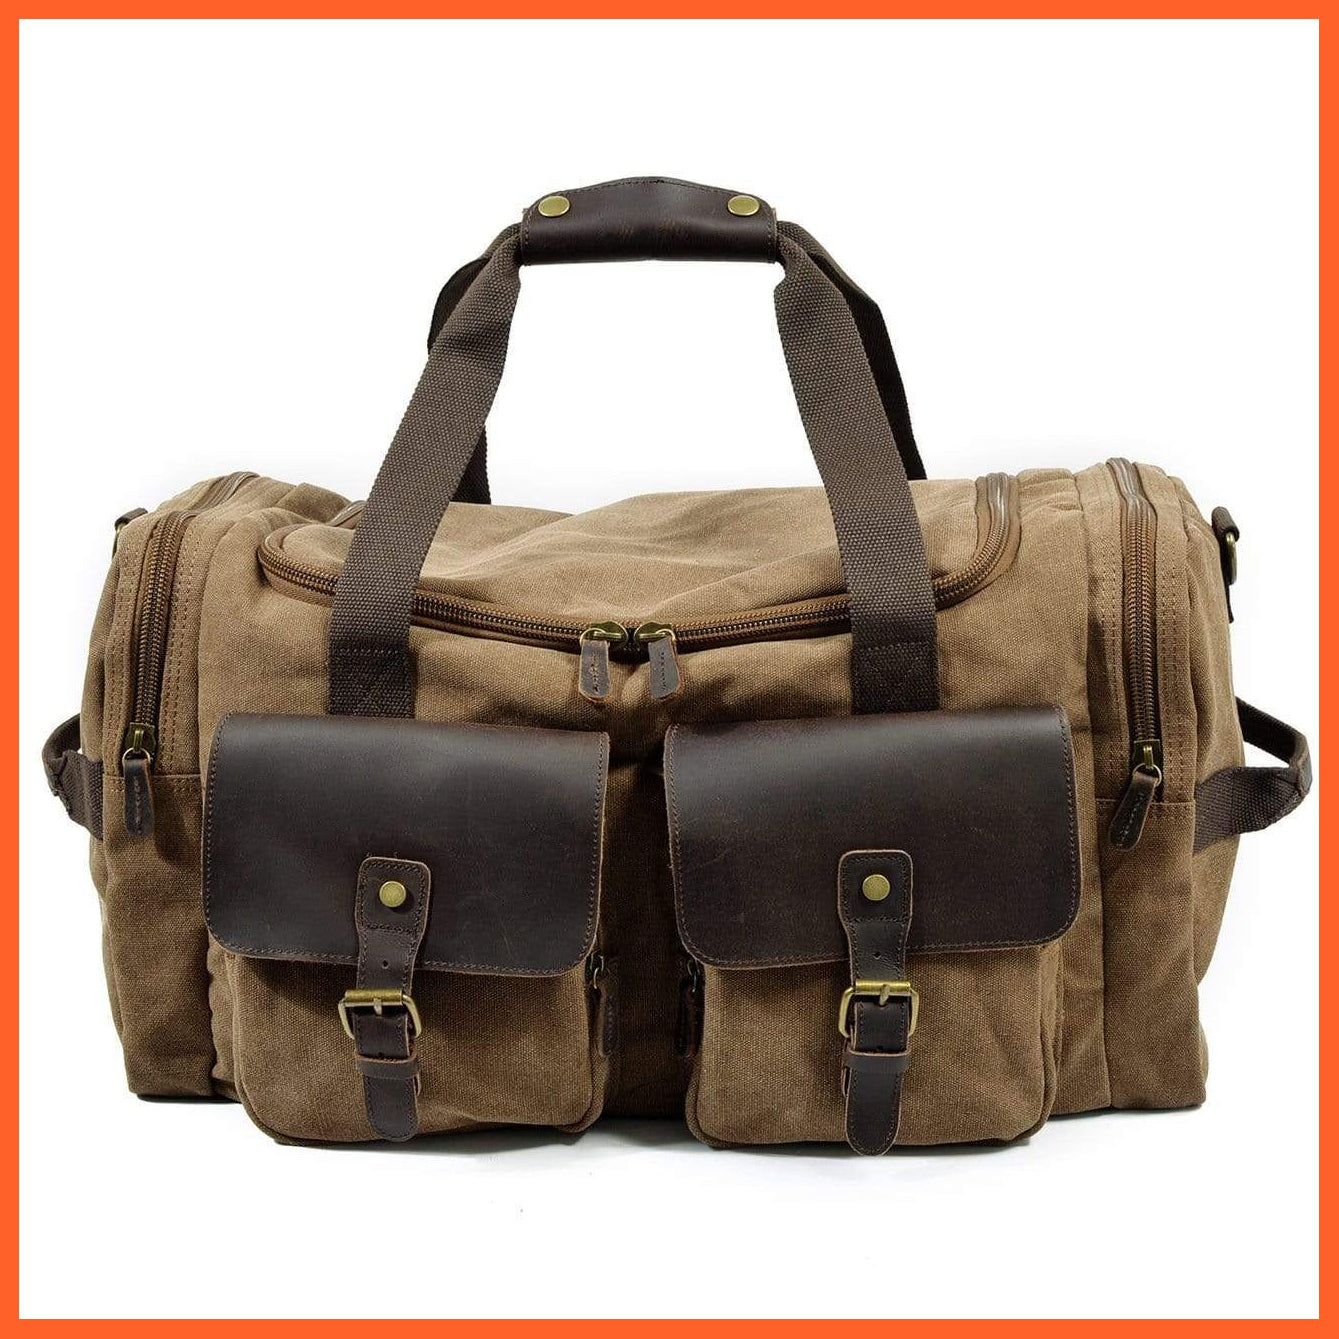 Large Gym Bag | Travel Bag | Storage Bag | Mens Bags | Sports Bag | whatagift.com.au.